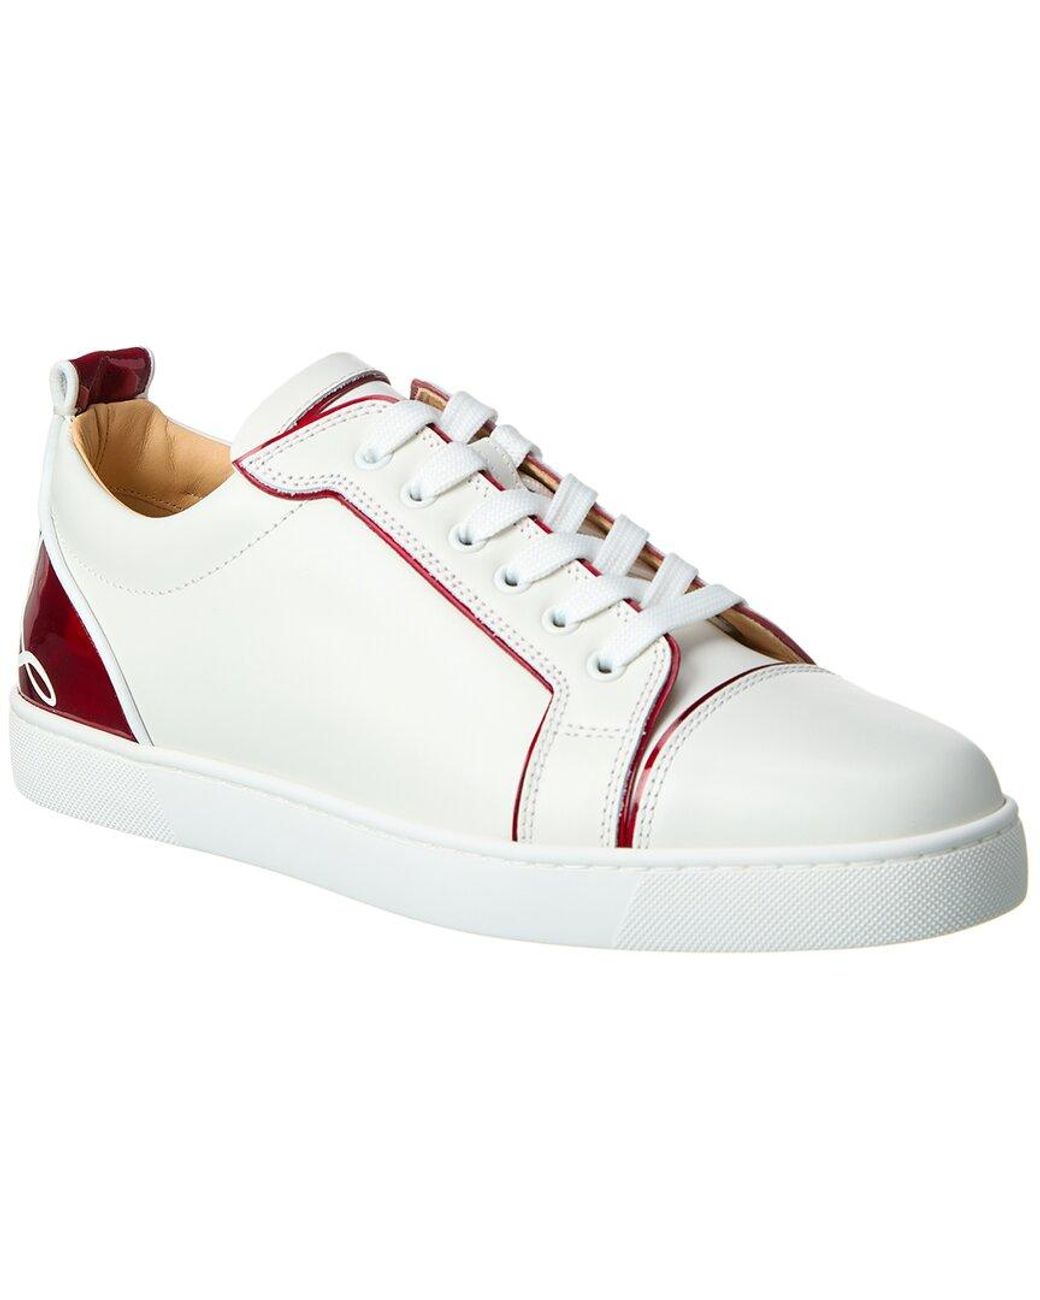 Fun Louis Junior Leather Sneakers in White - Christian Louboutin